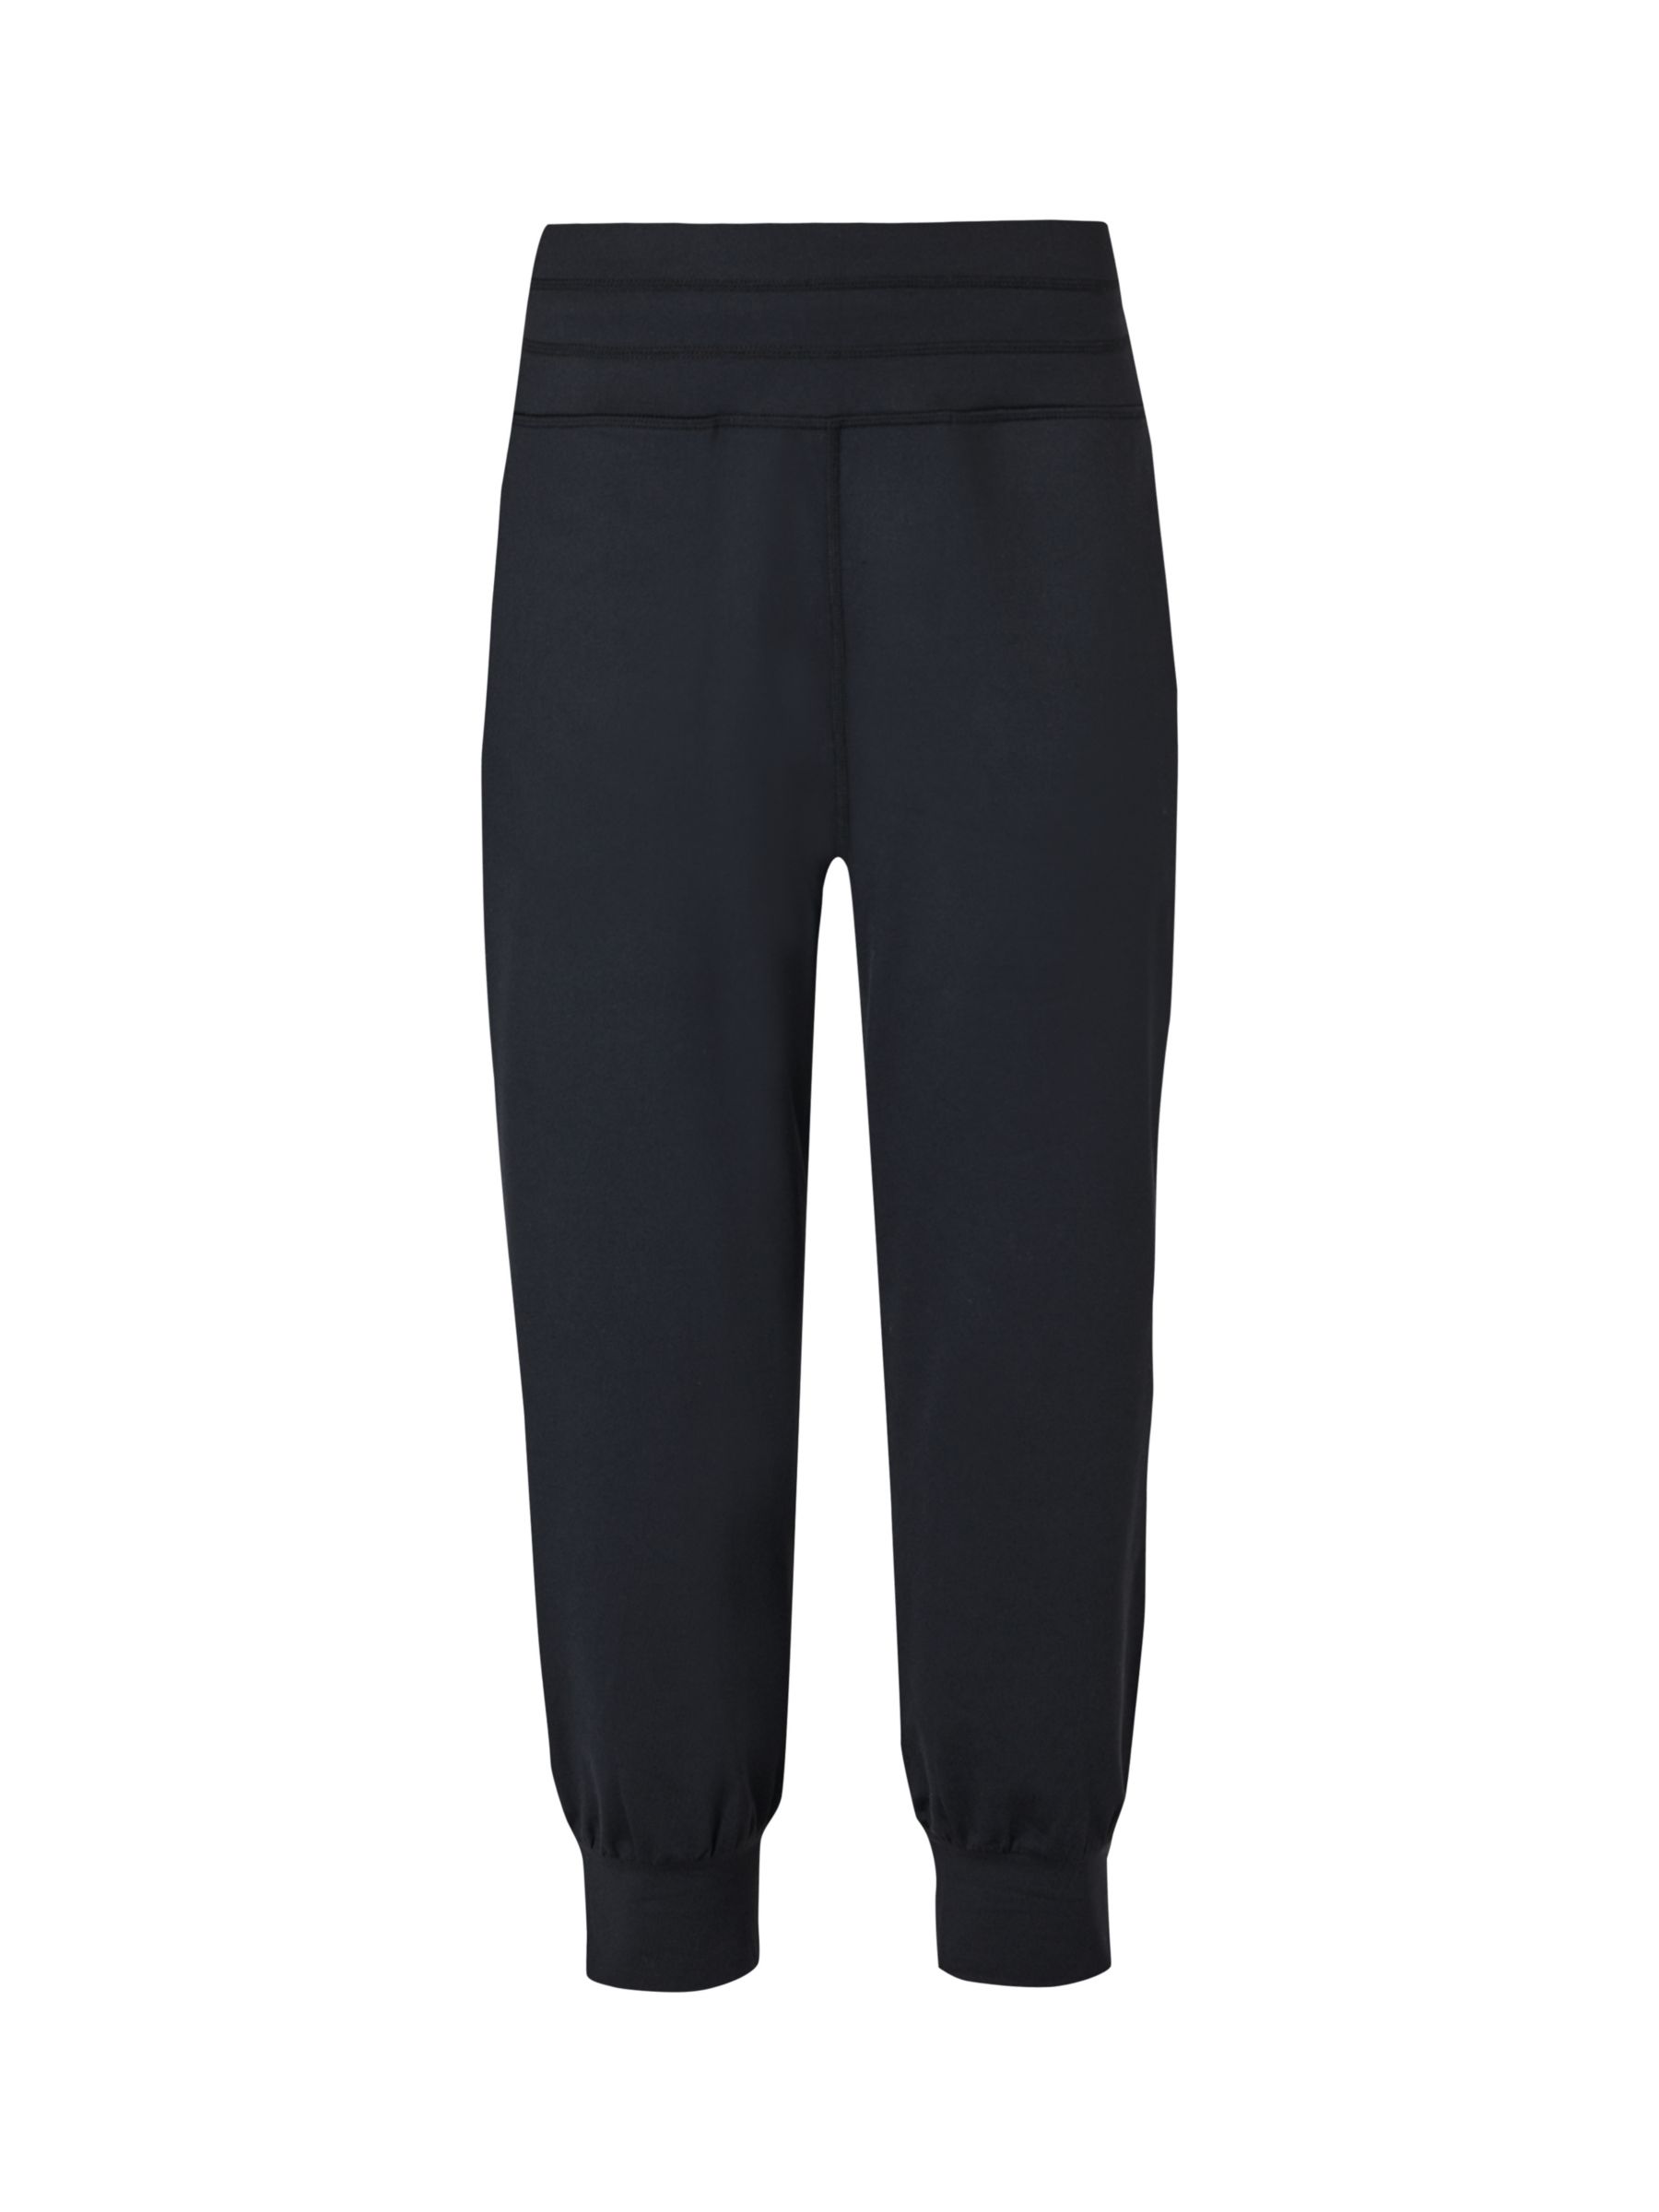 Sweaty Betty Gaia Yoga Capri Trousers, Black at John Lewis & Partners